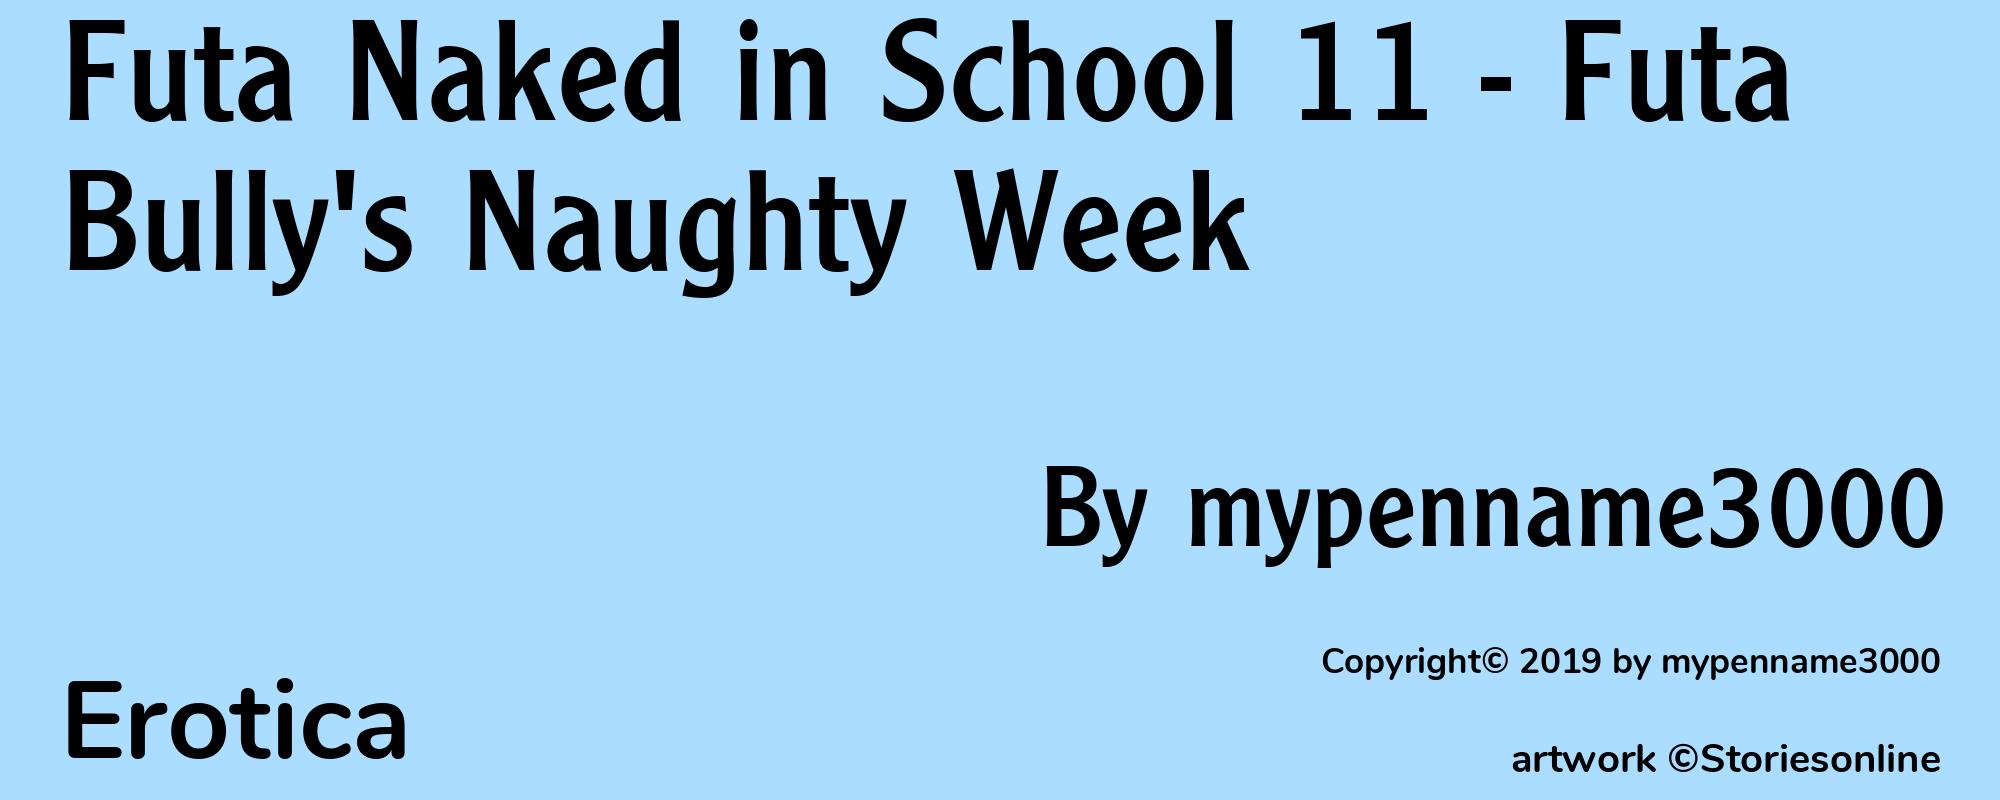 Futa Naked in School 11 - Futa Bully's Naughty Week - Cover